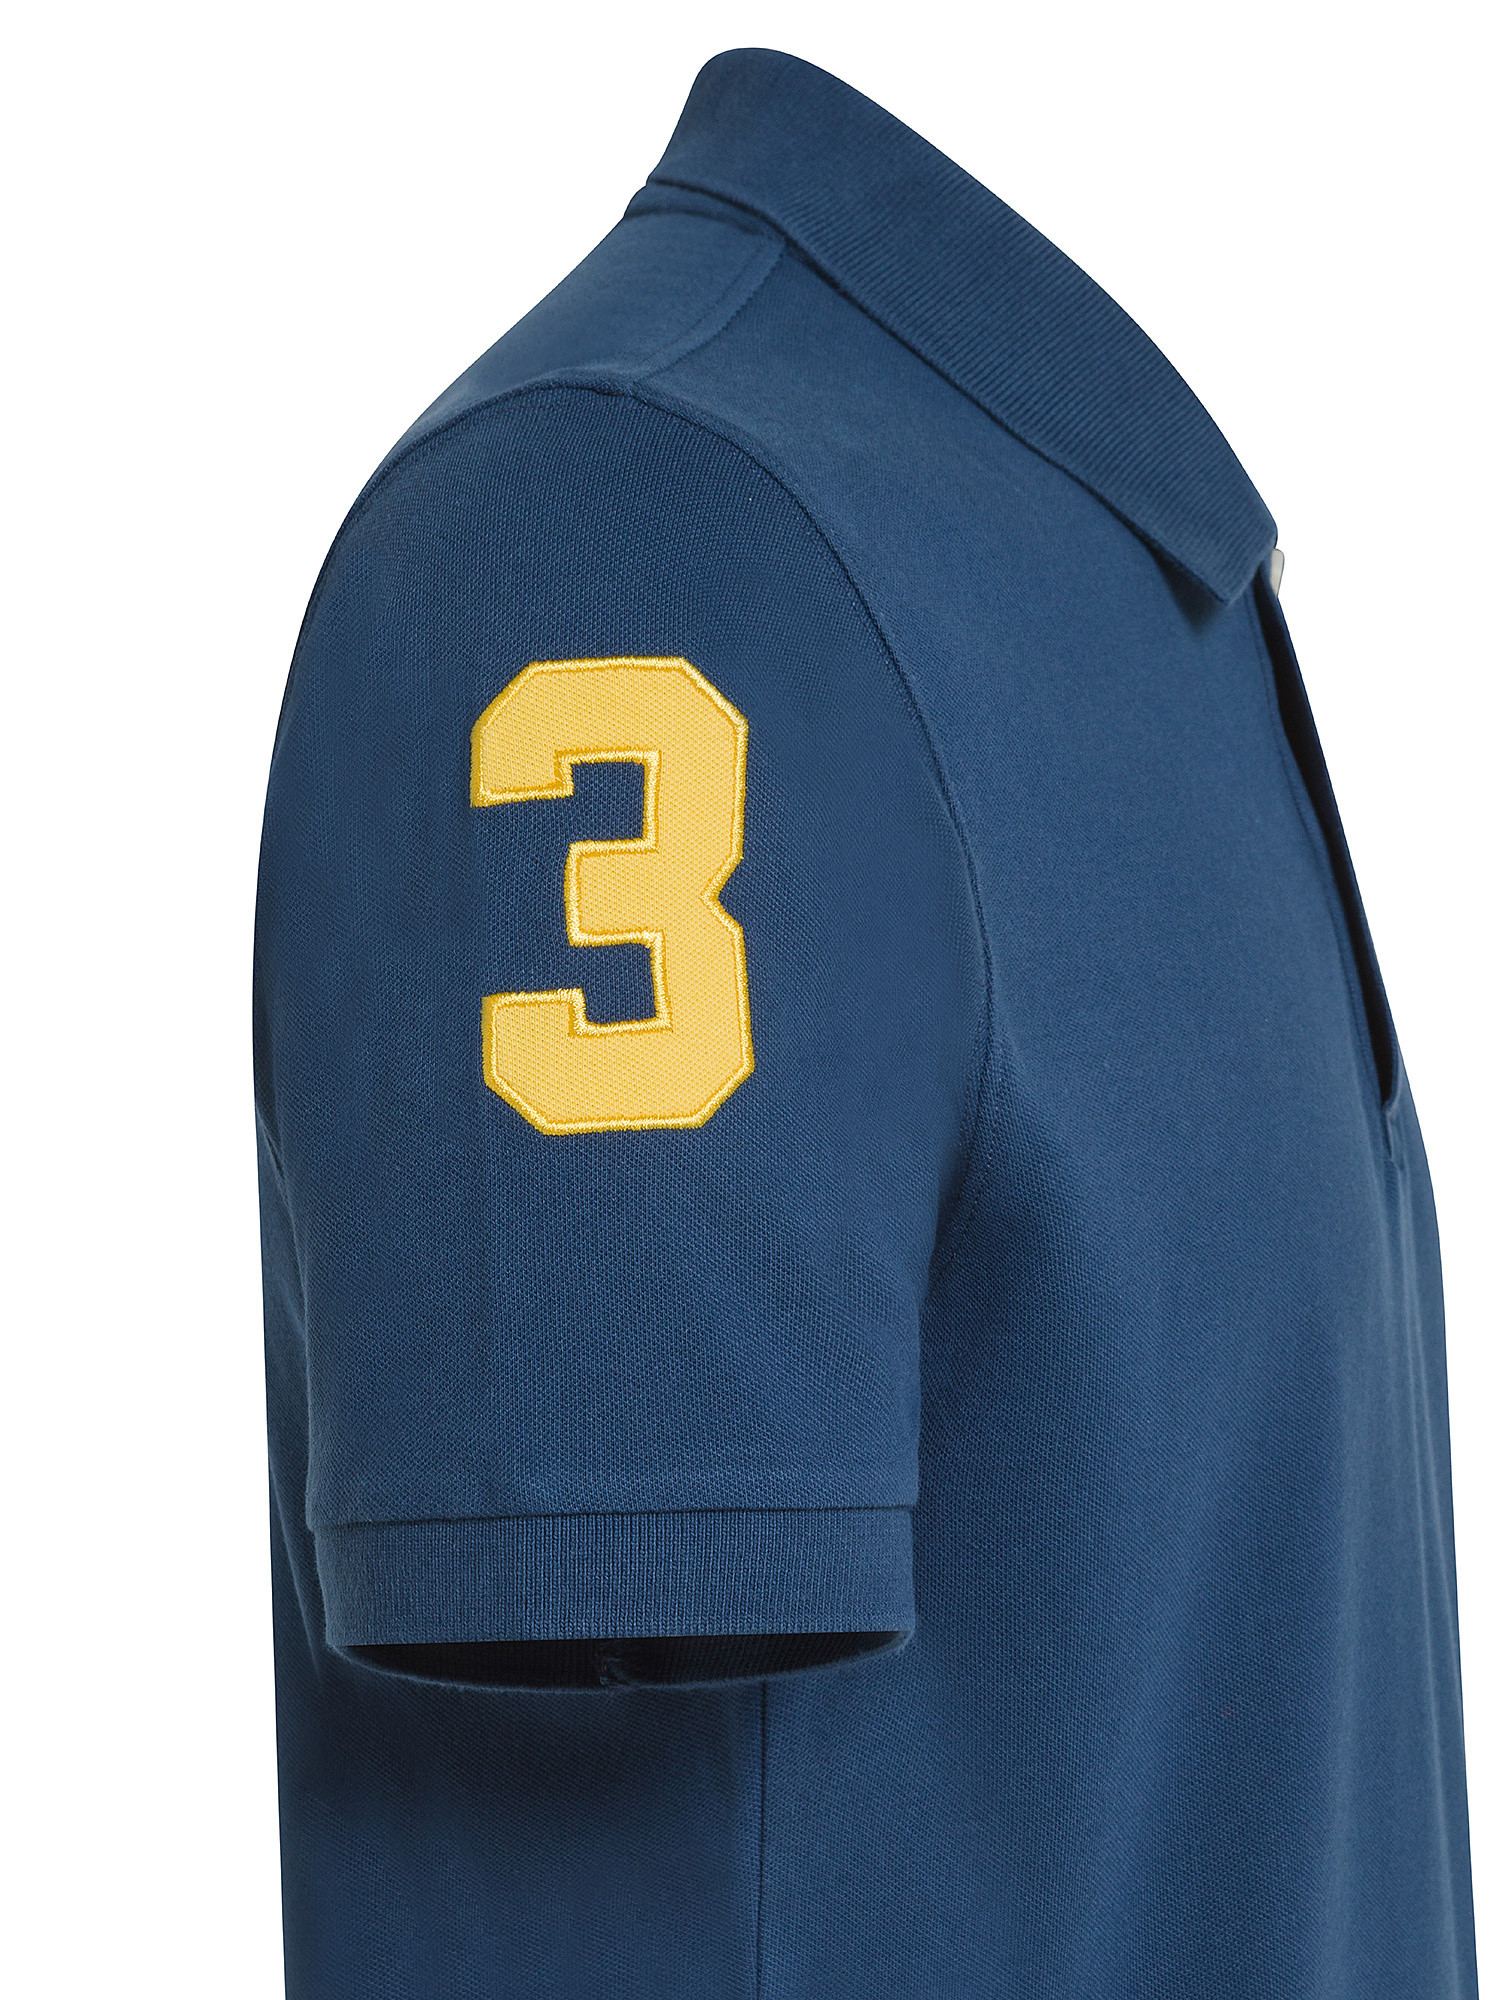 La Martina - Short-sleeved polo shirt in stretch piqué, Blue, large image number 2